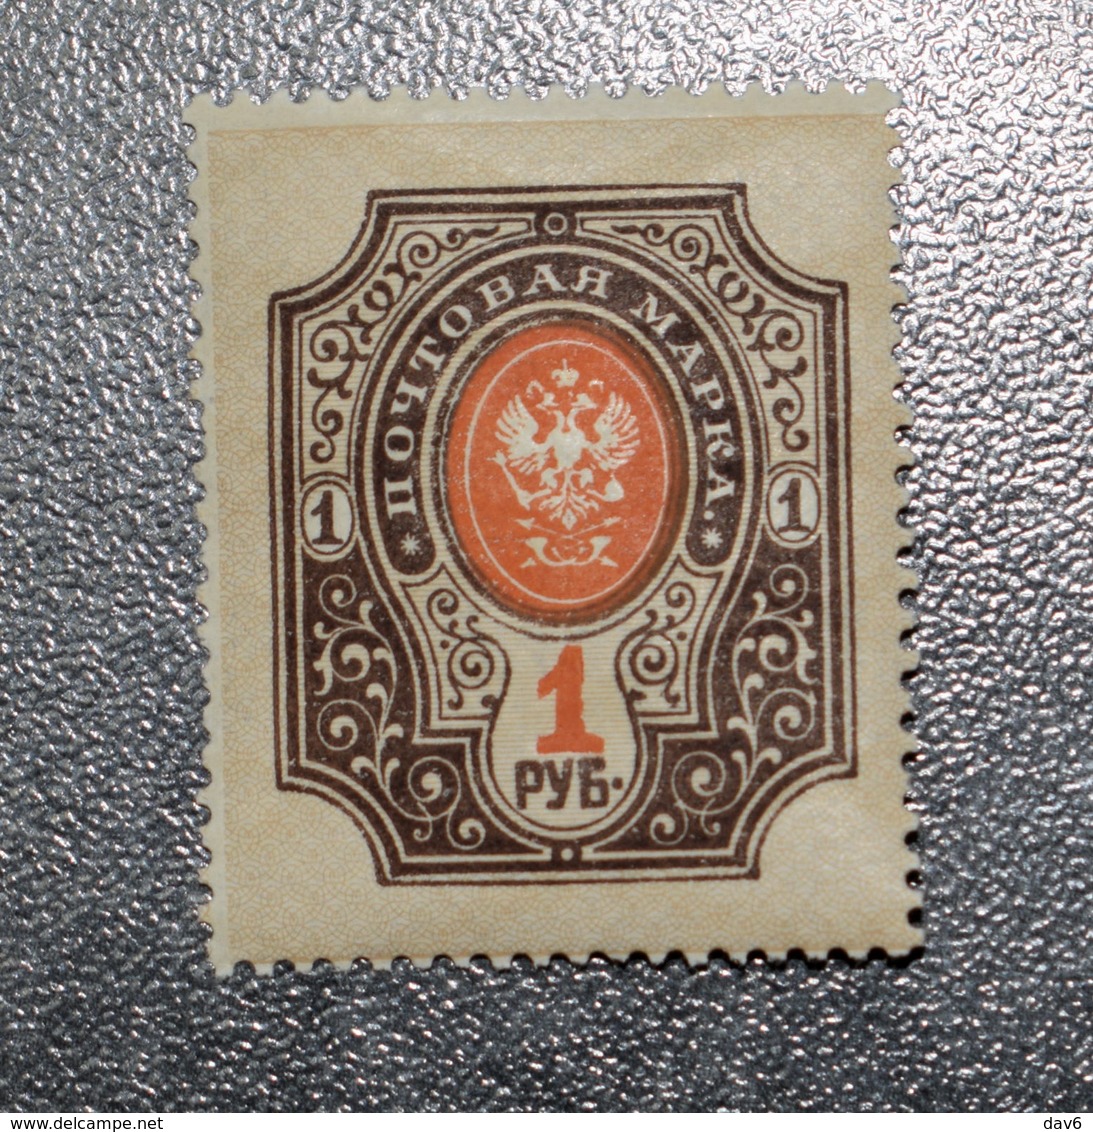 RUSSIA  Empire  STAMPS  1889   Scott45  P13.5     ~~L@@K~~ - Unused Stamps